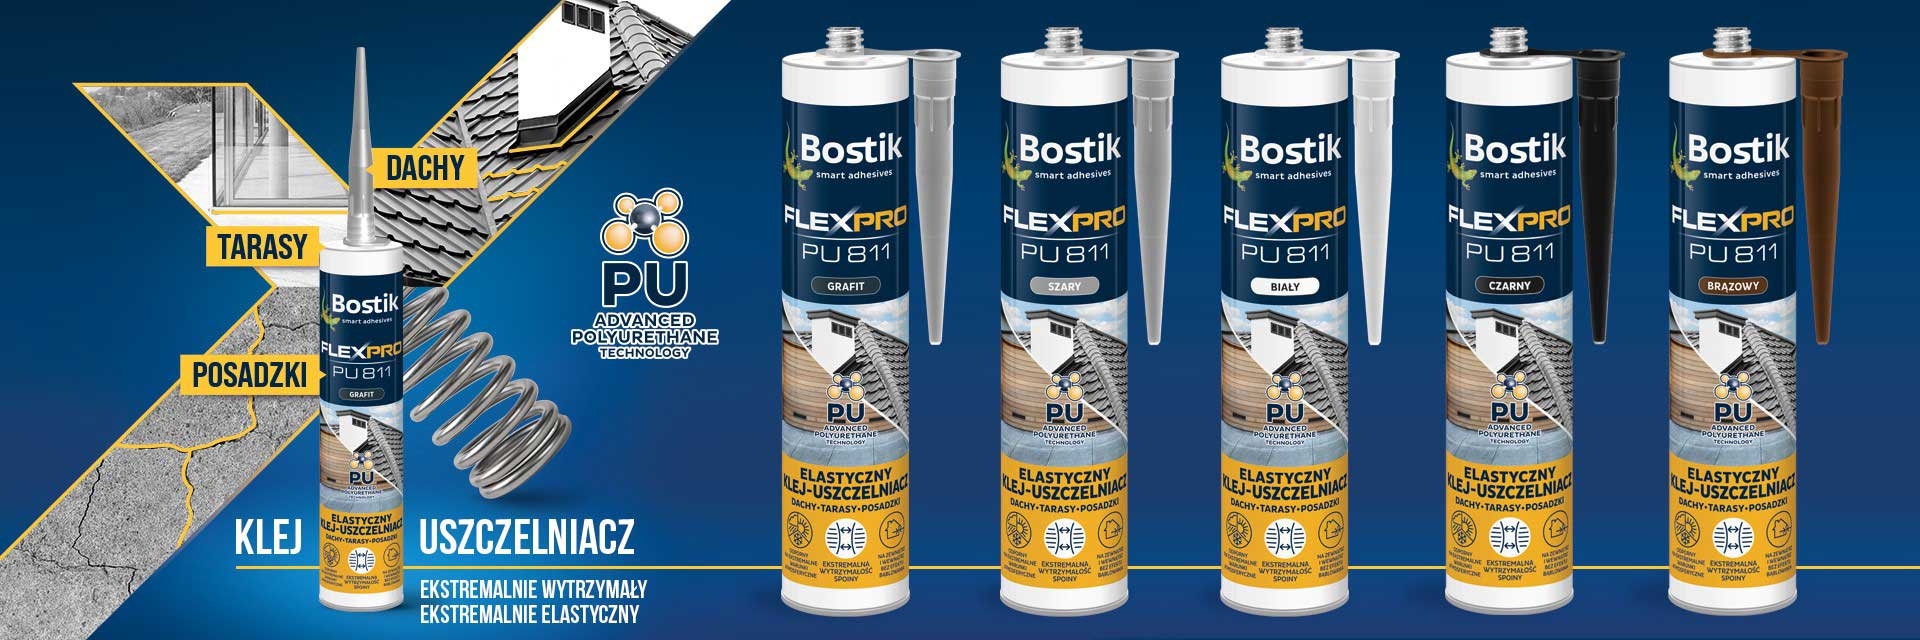 Bostik DIY Poland Flexpro range banner